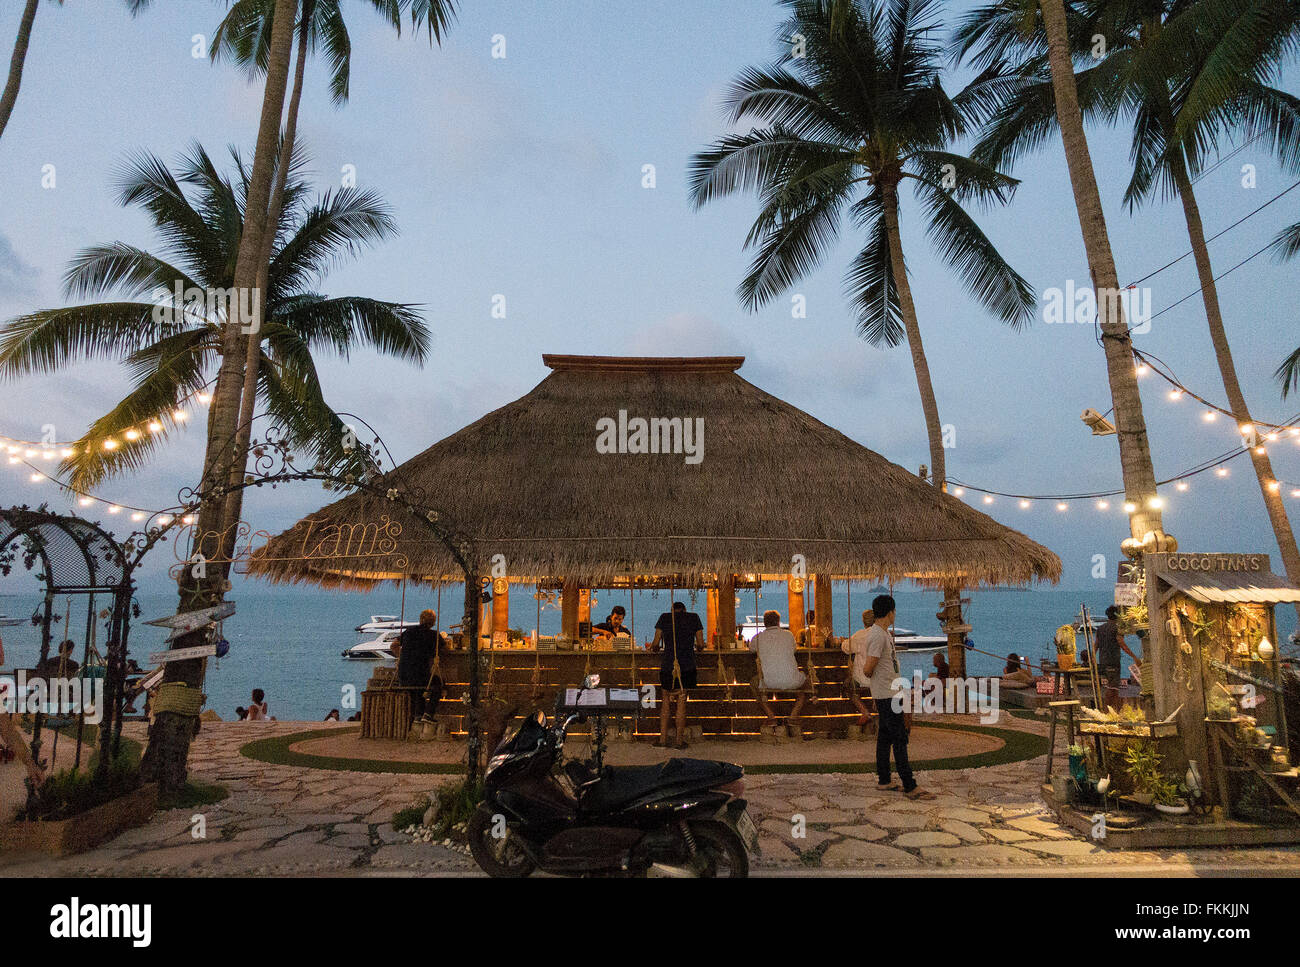 Coco Tams bar in Fisherman's Village,Bophut Beach.Koh Samui Thailand